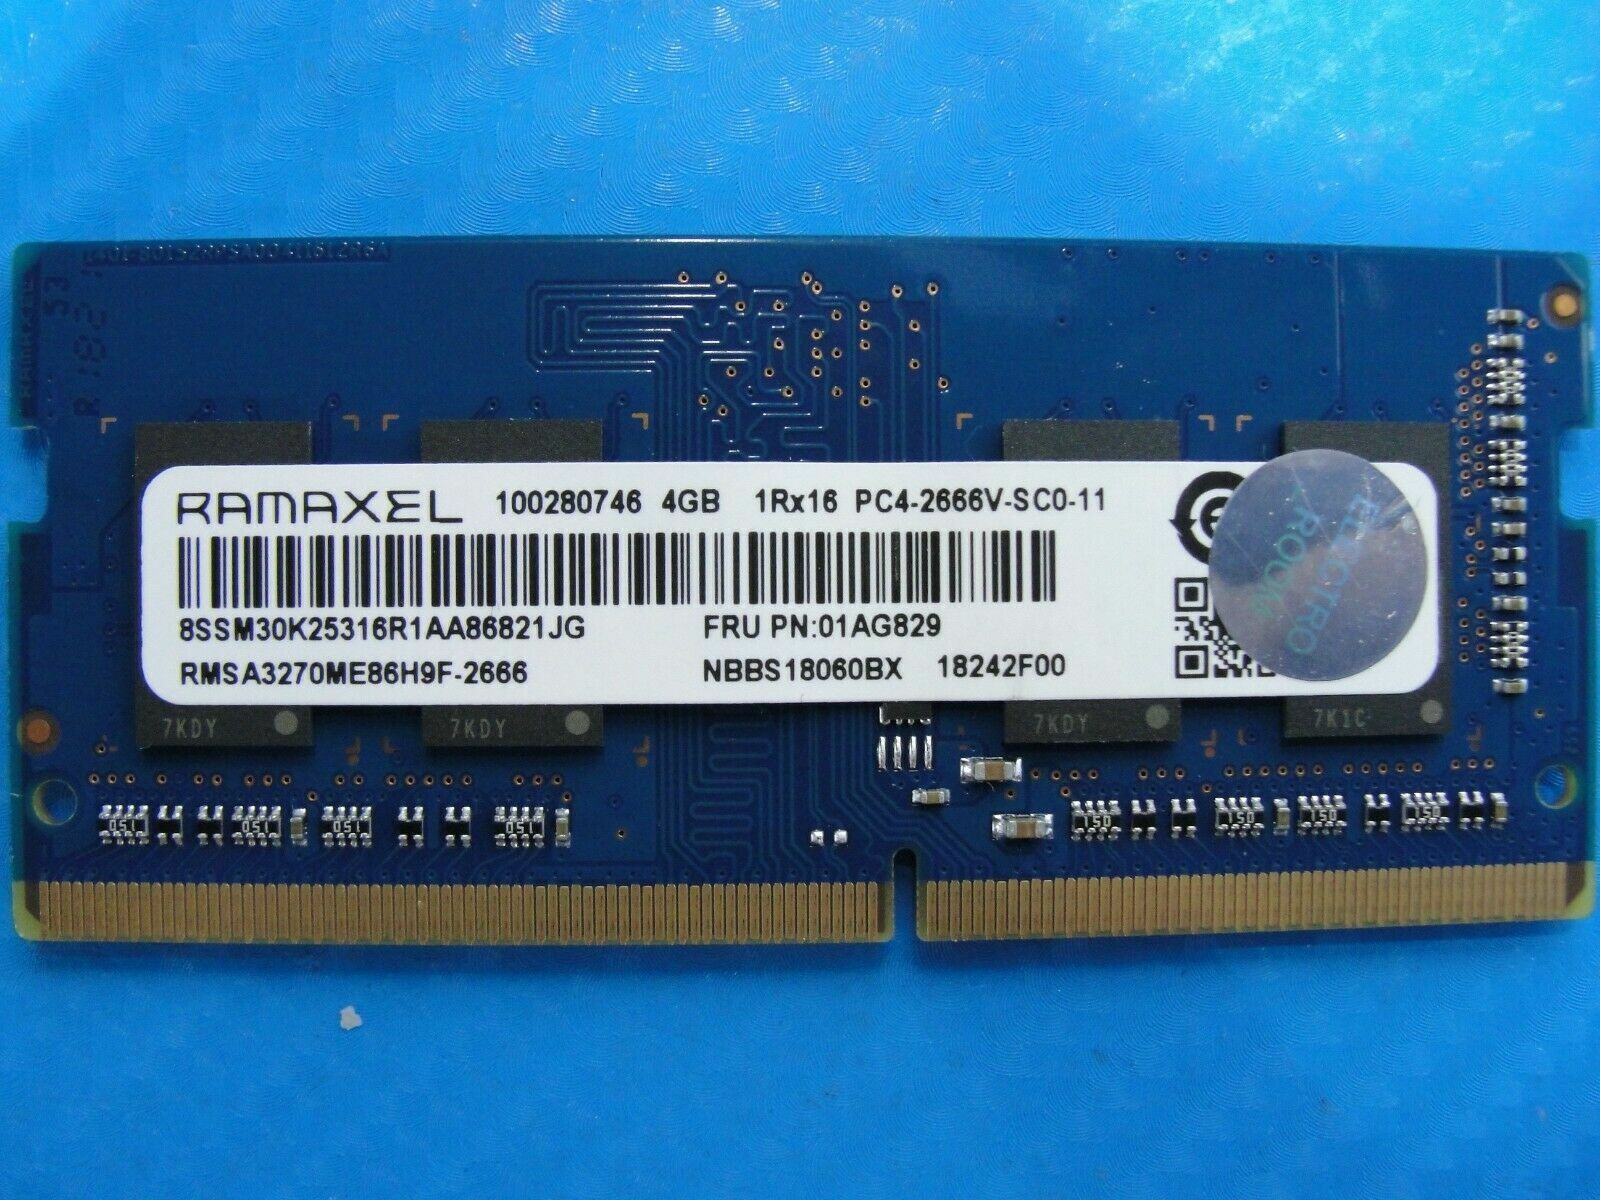 Ramaxel RAM Memory 4GB PC4-2666V